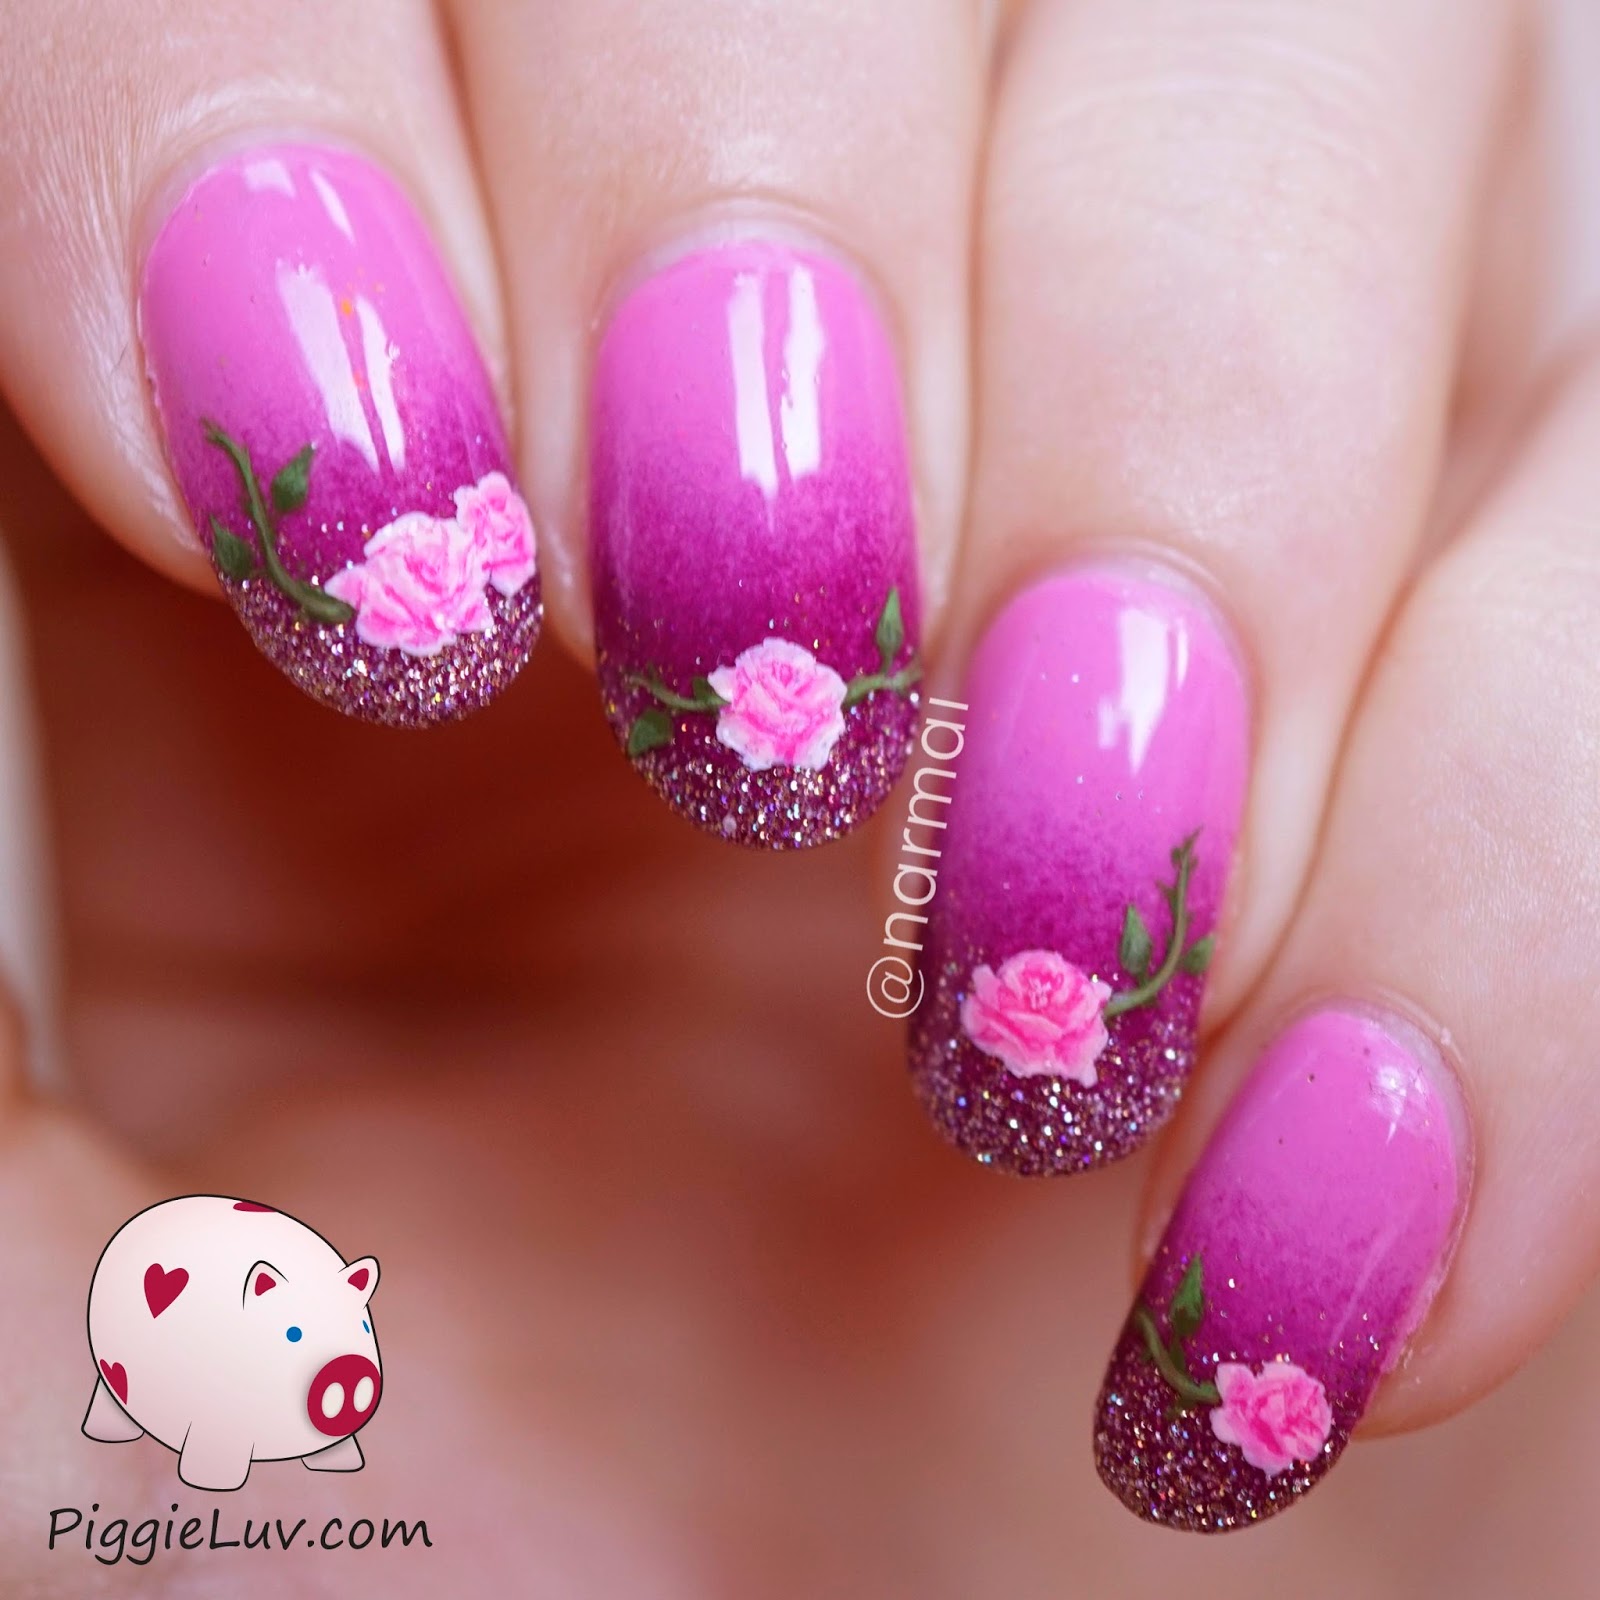 PiggieLuv Freehand roses nail art for Valentine's Day